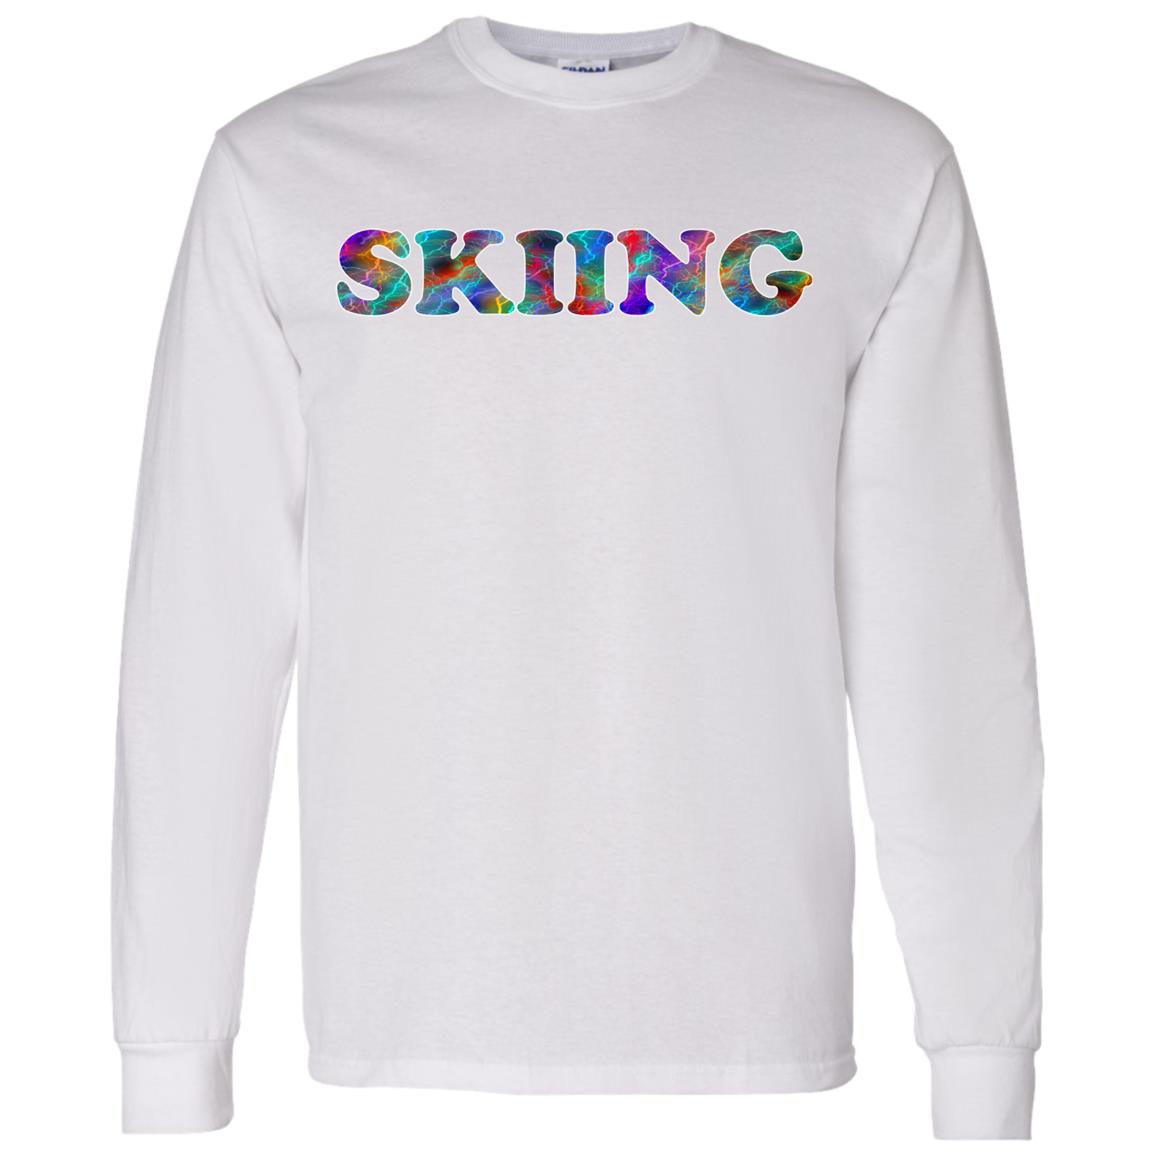 Skiing Long Sleeve Sport T-Shirt